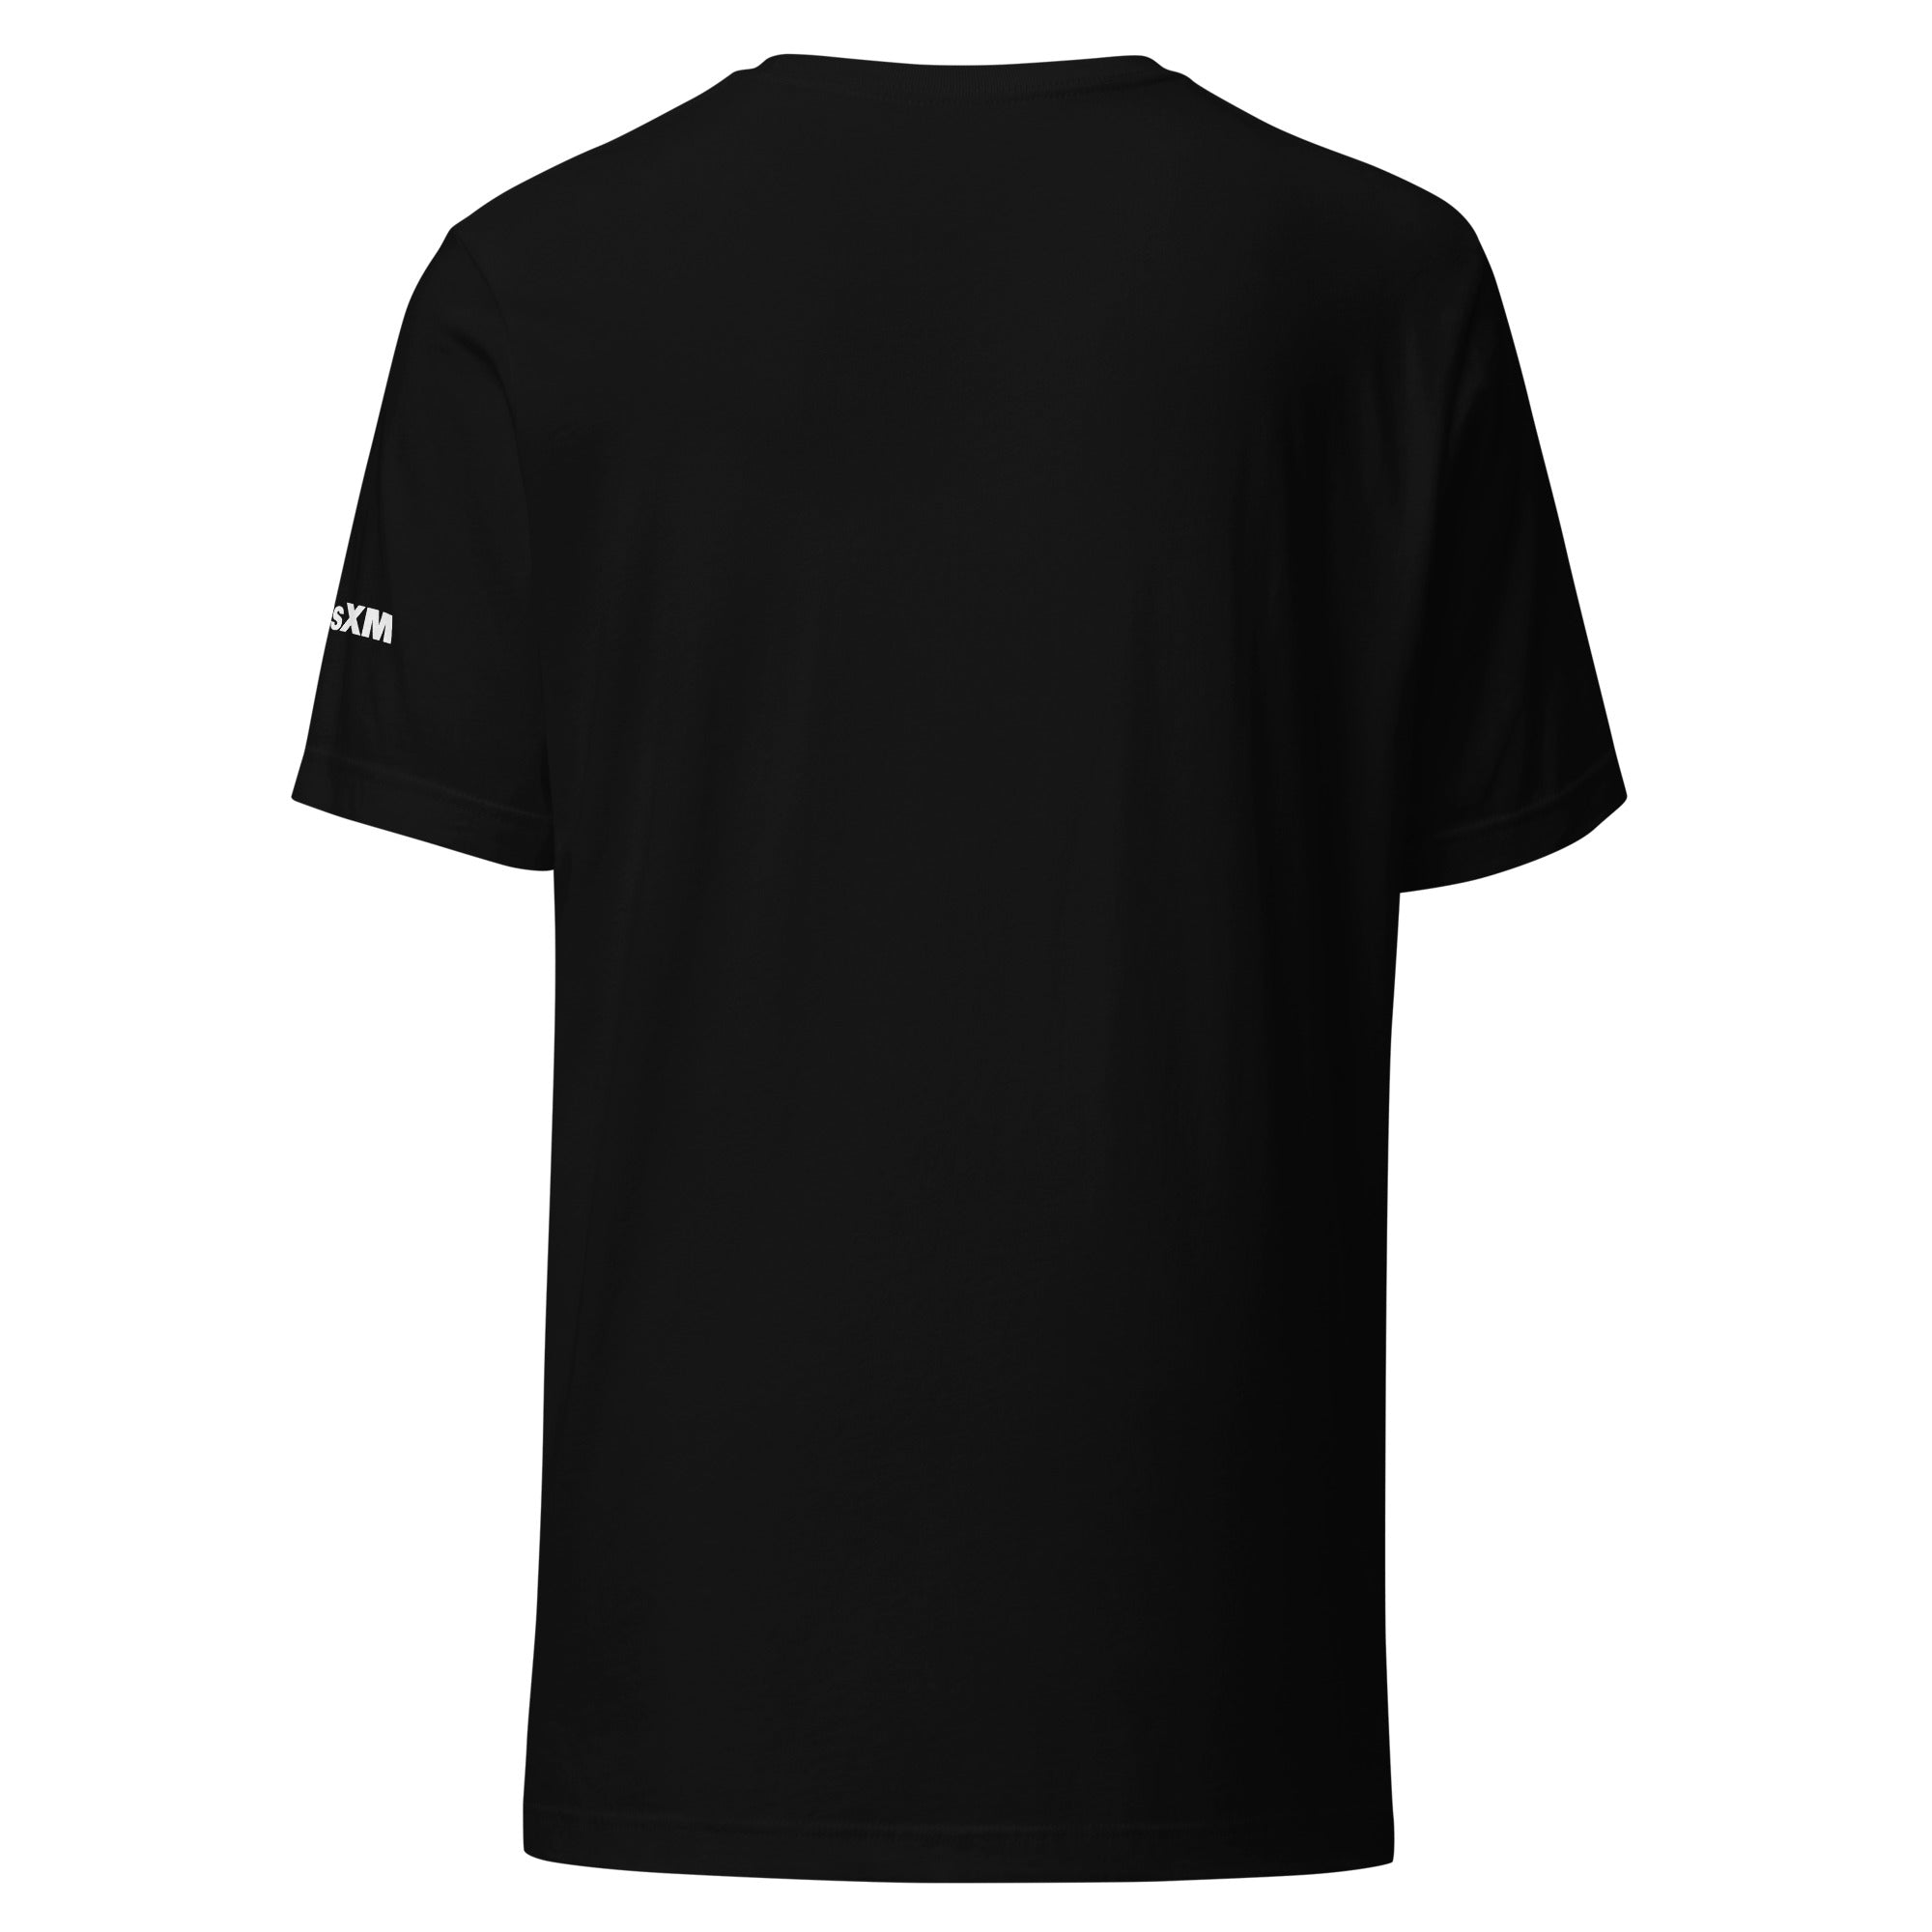 Symphony Hall: T-shirt (Black)